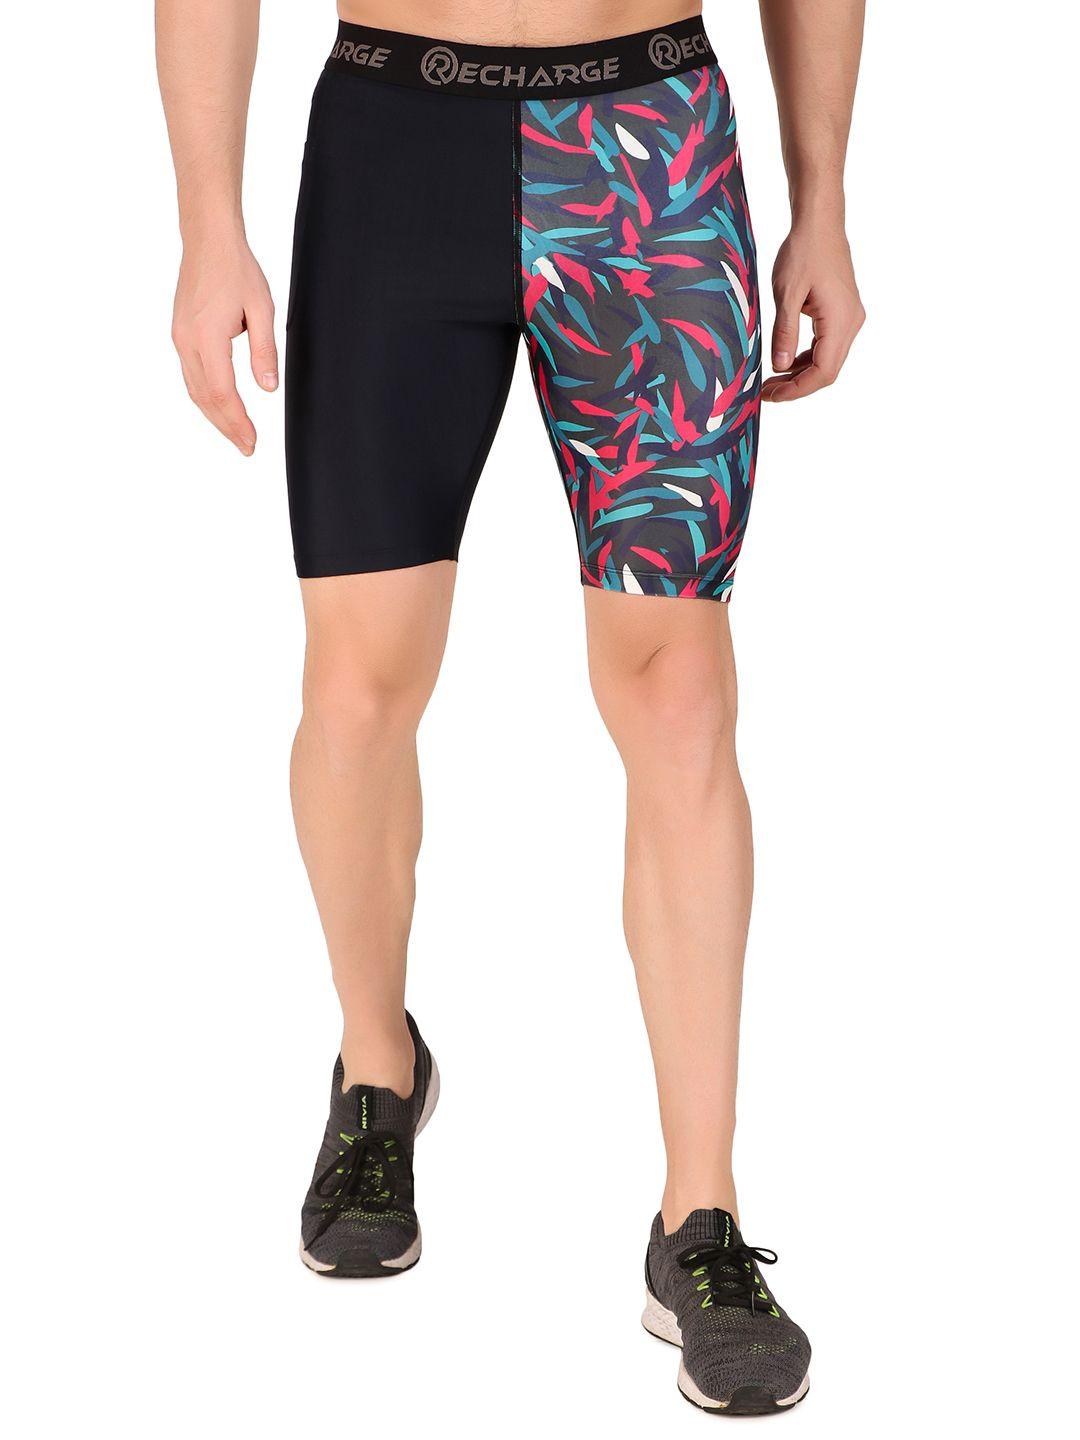 redesign men slim-fit above knee-length gym tights shorts